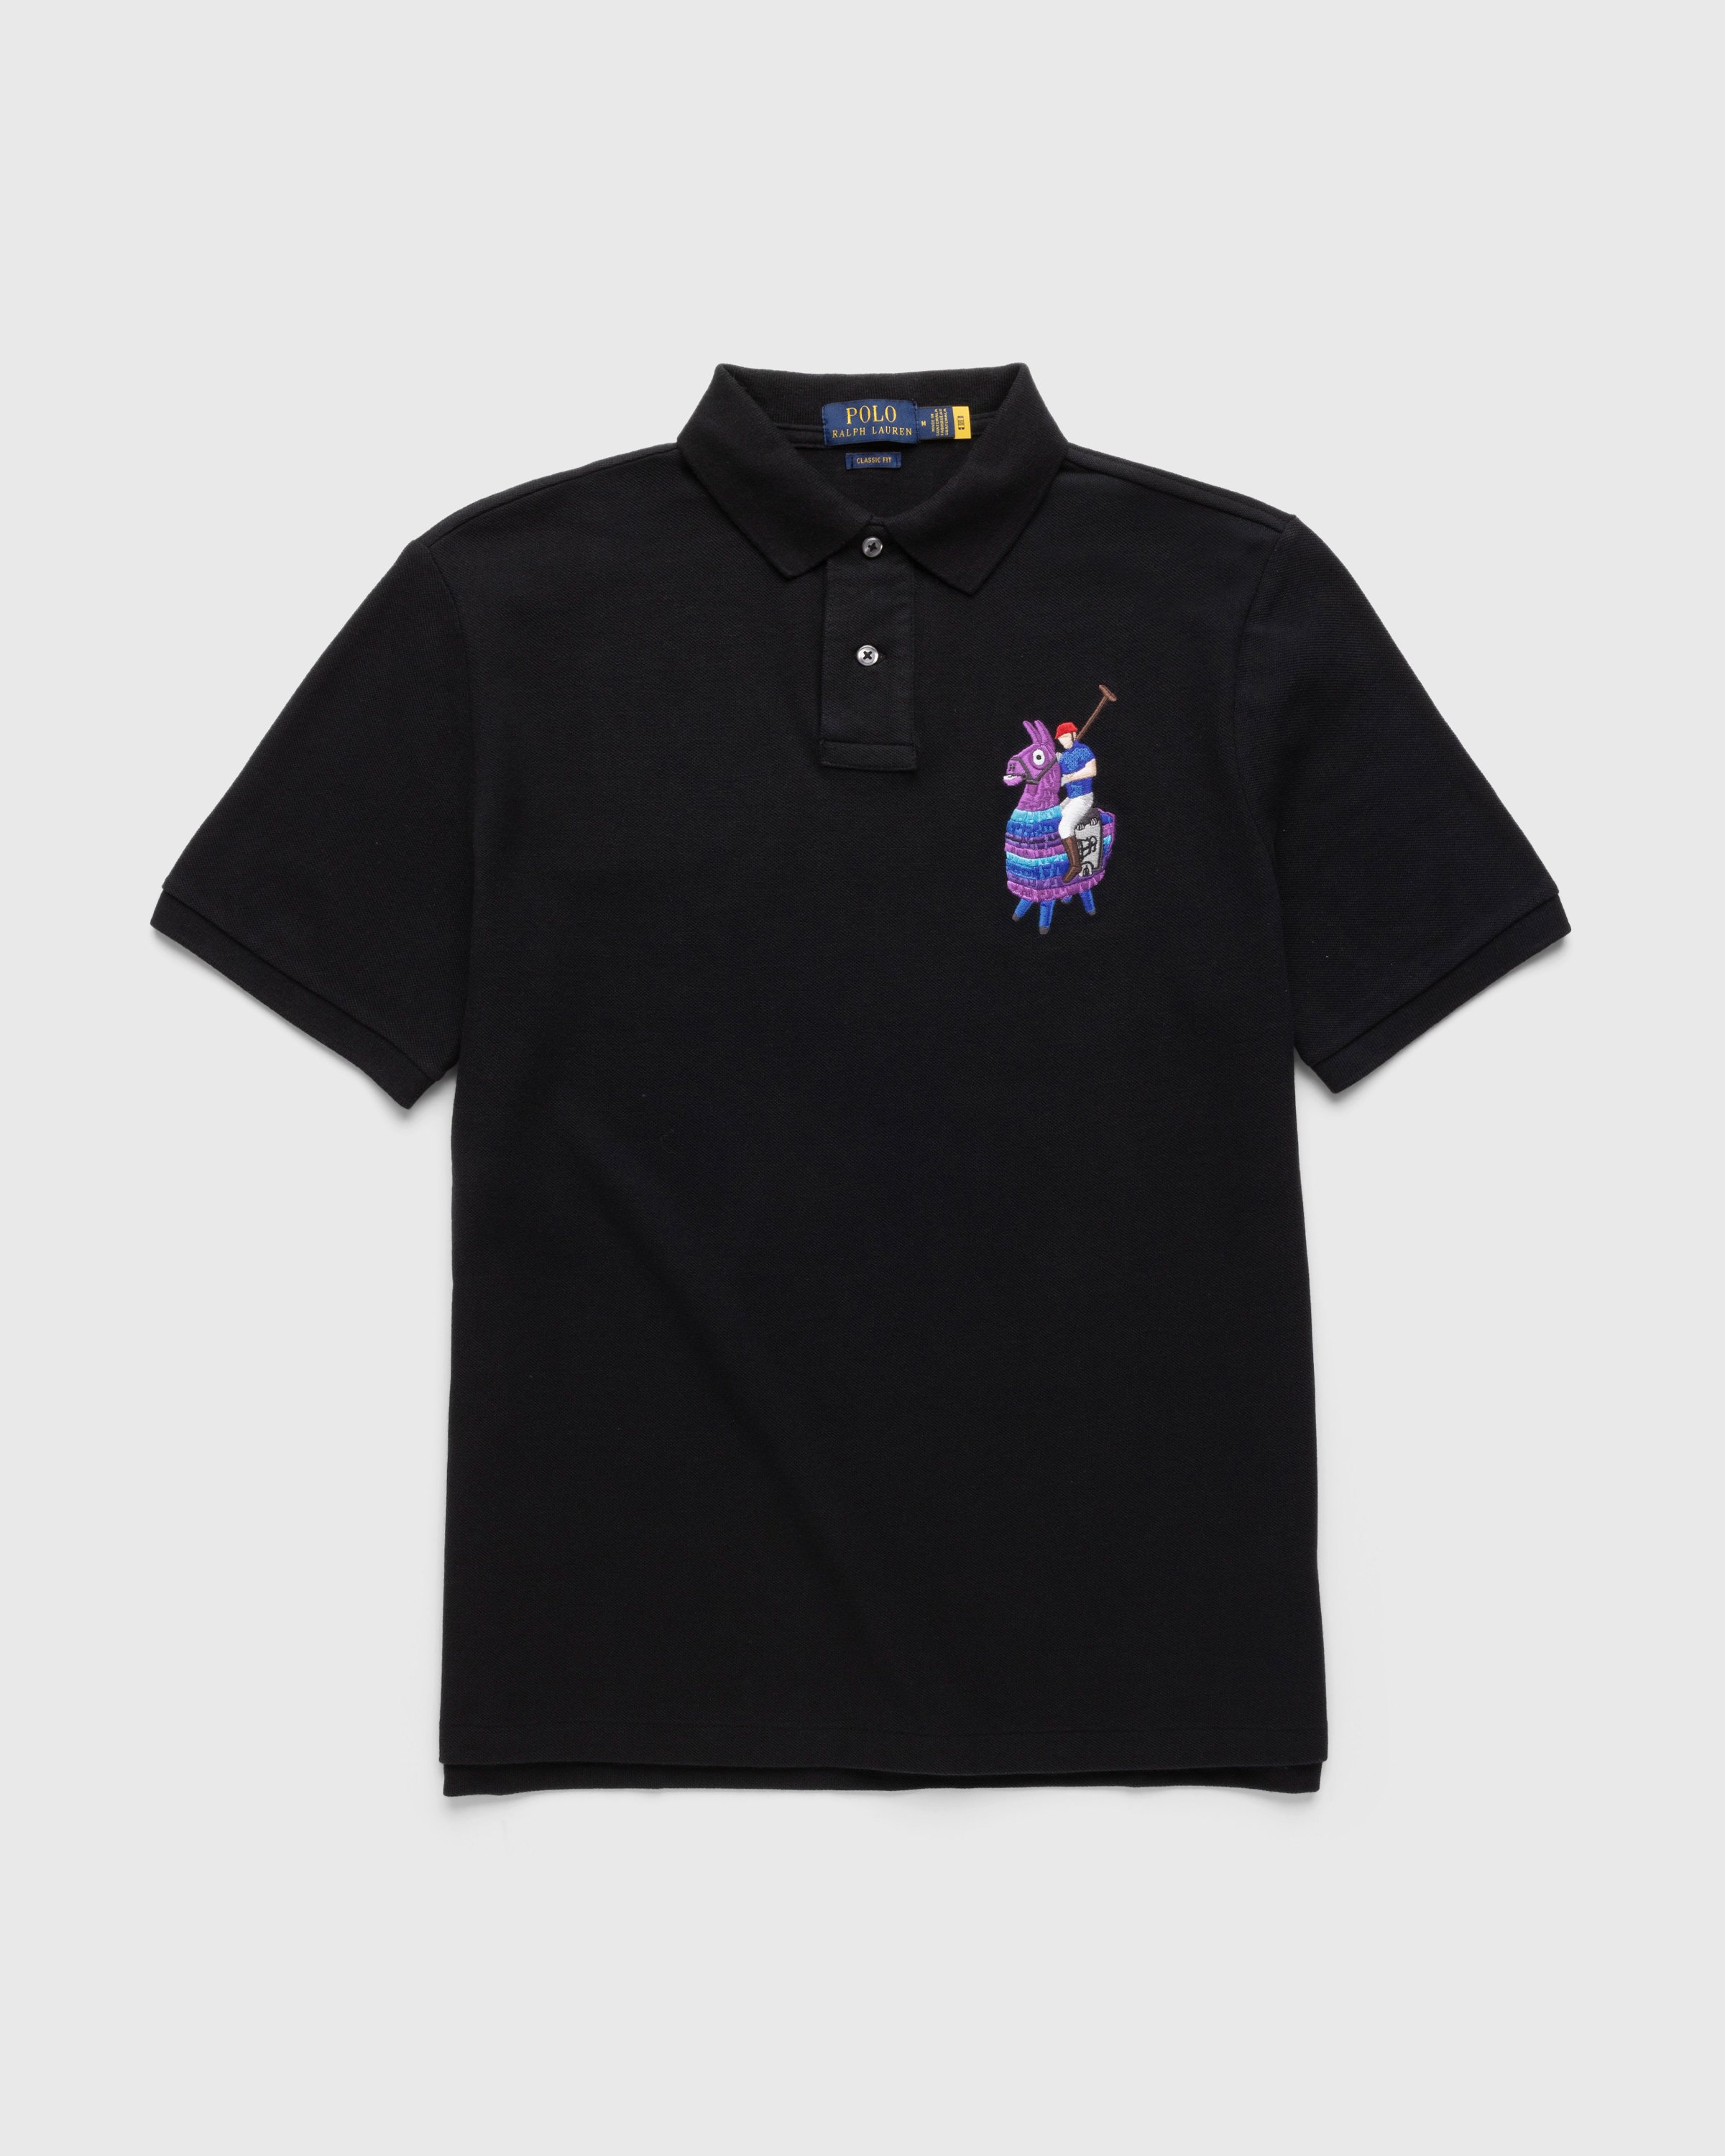 Ralph Lauren x Fortnite - Short Sleeve Polo Shirt Black - Clothing - Black - Image 1